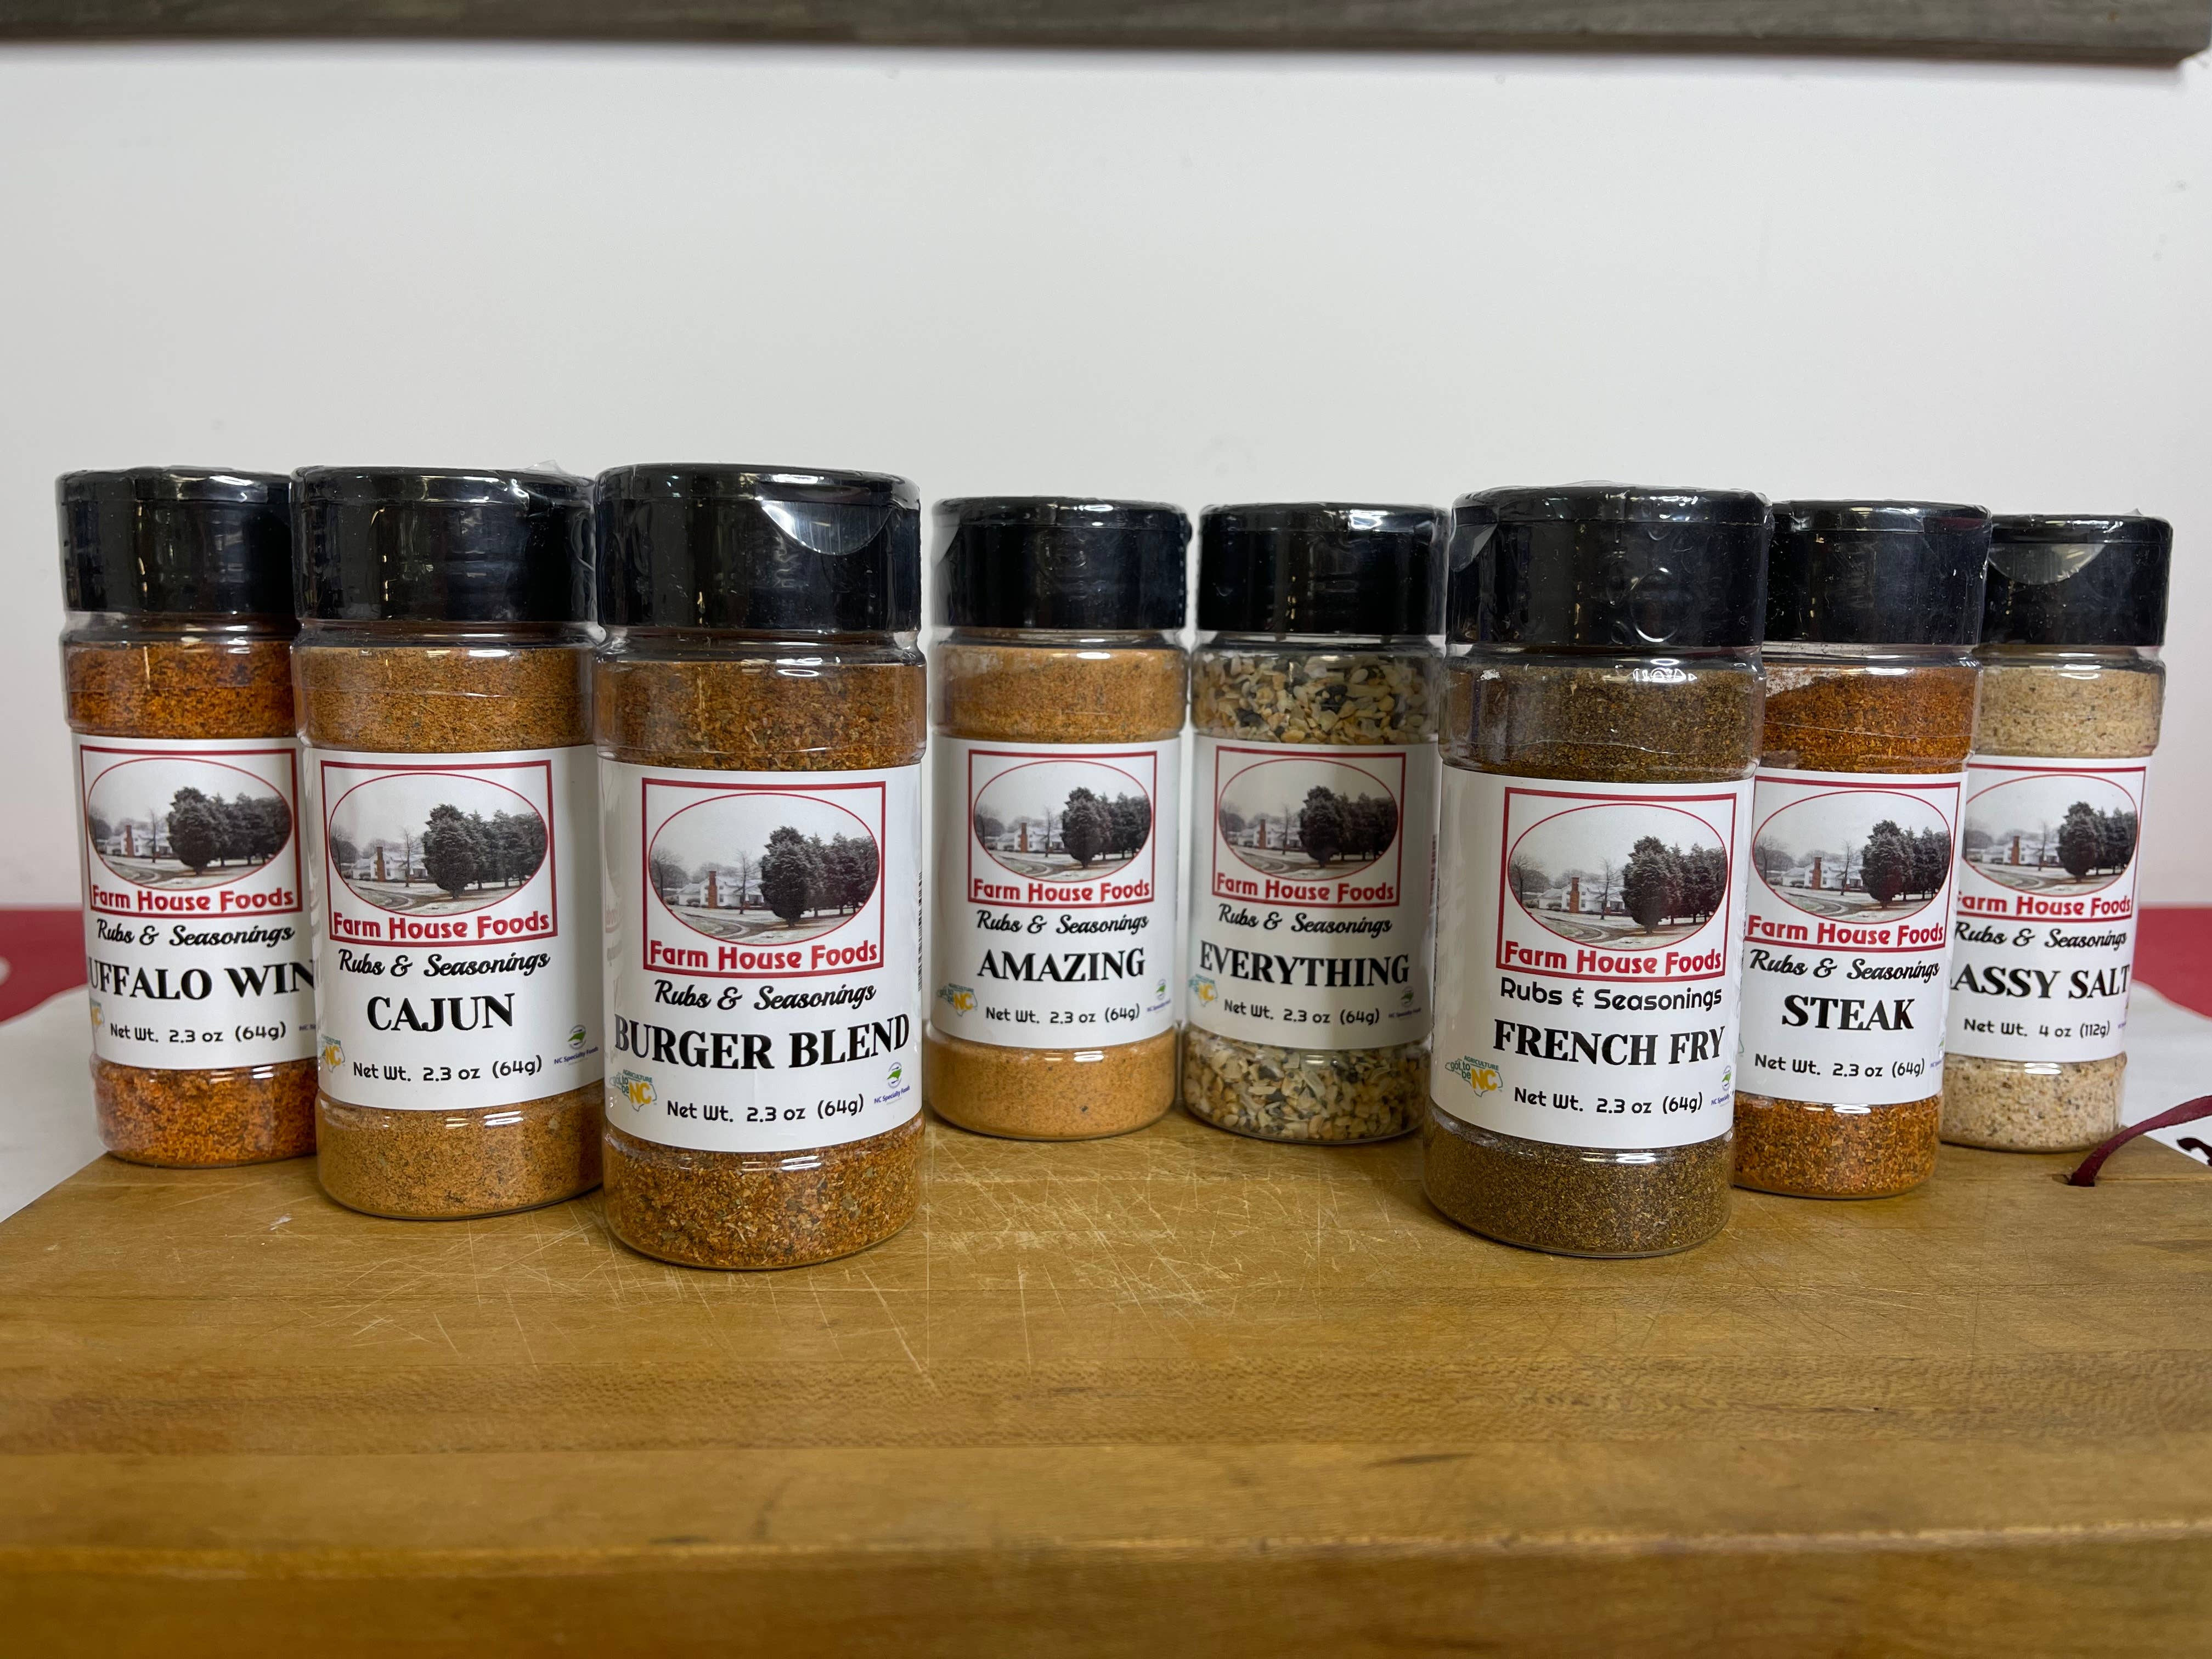 Morton & Bassett Spice Blend, Cajun